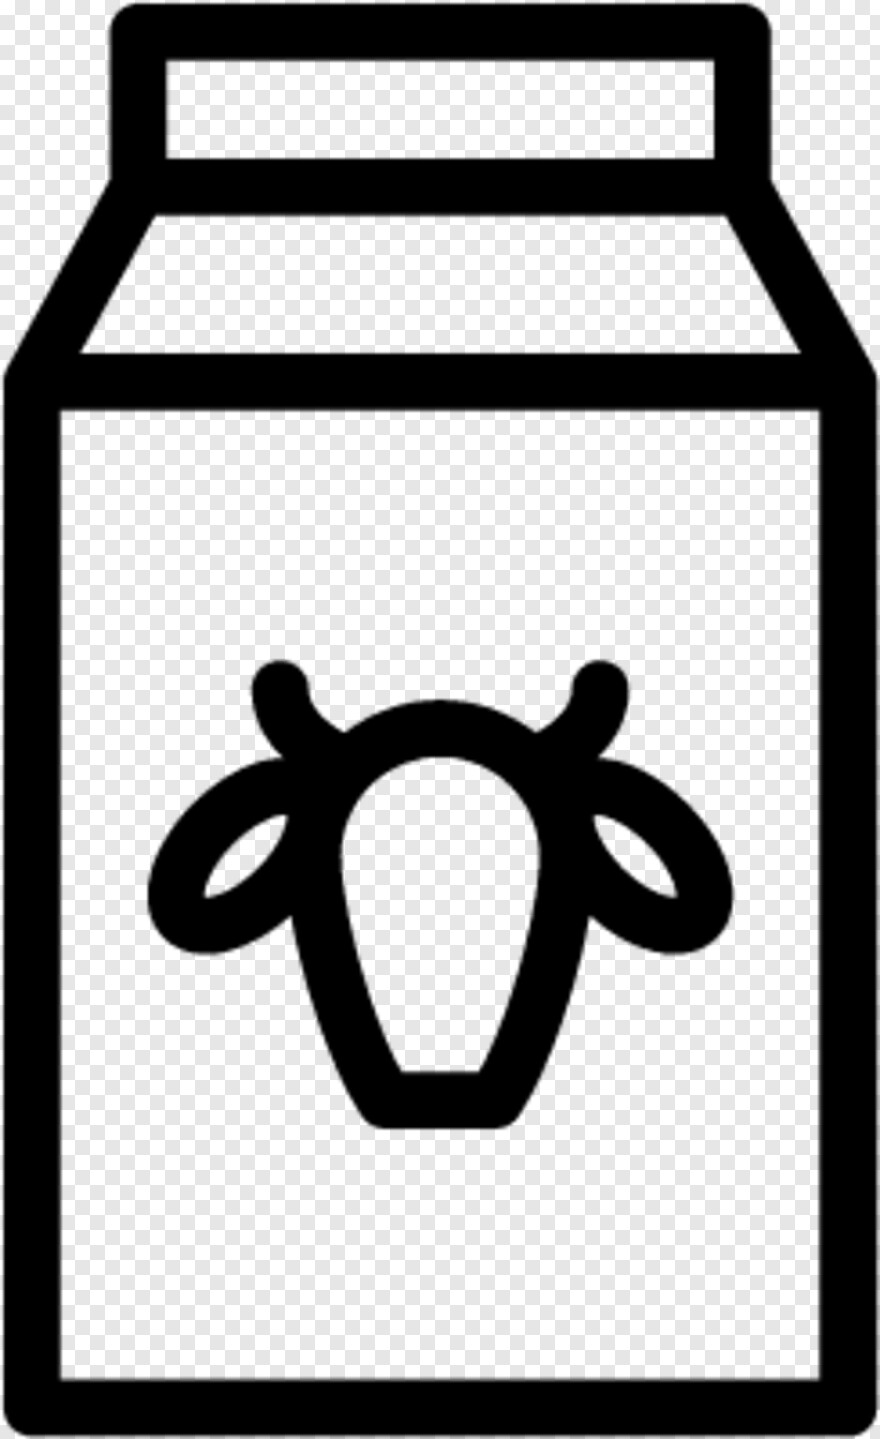 cow-icon # 949612